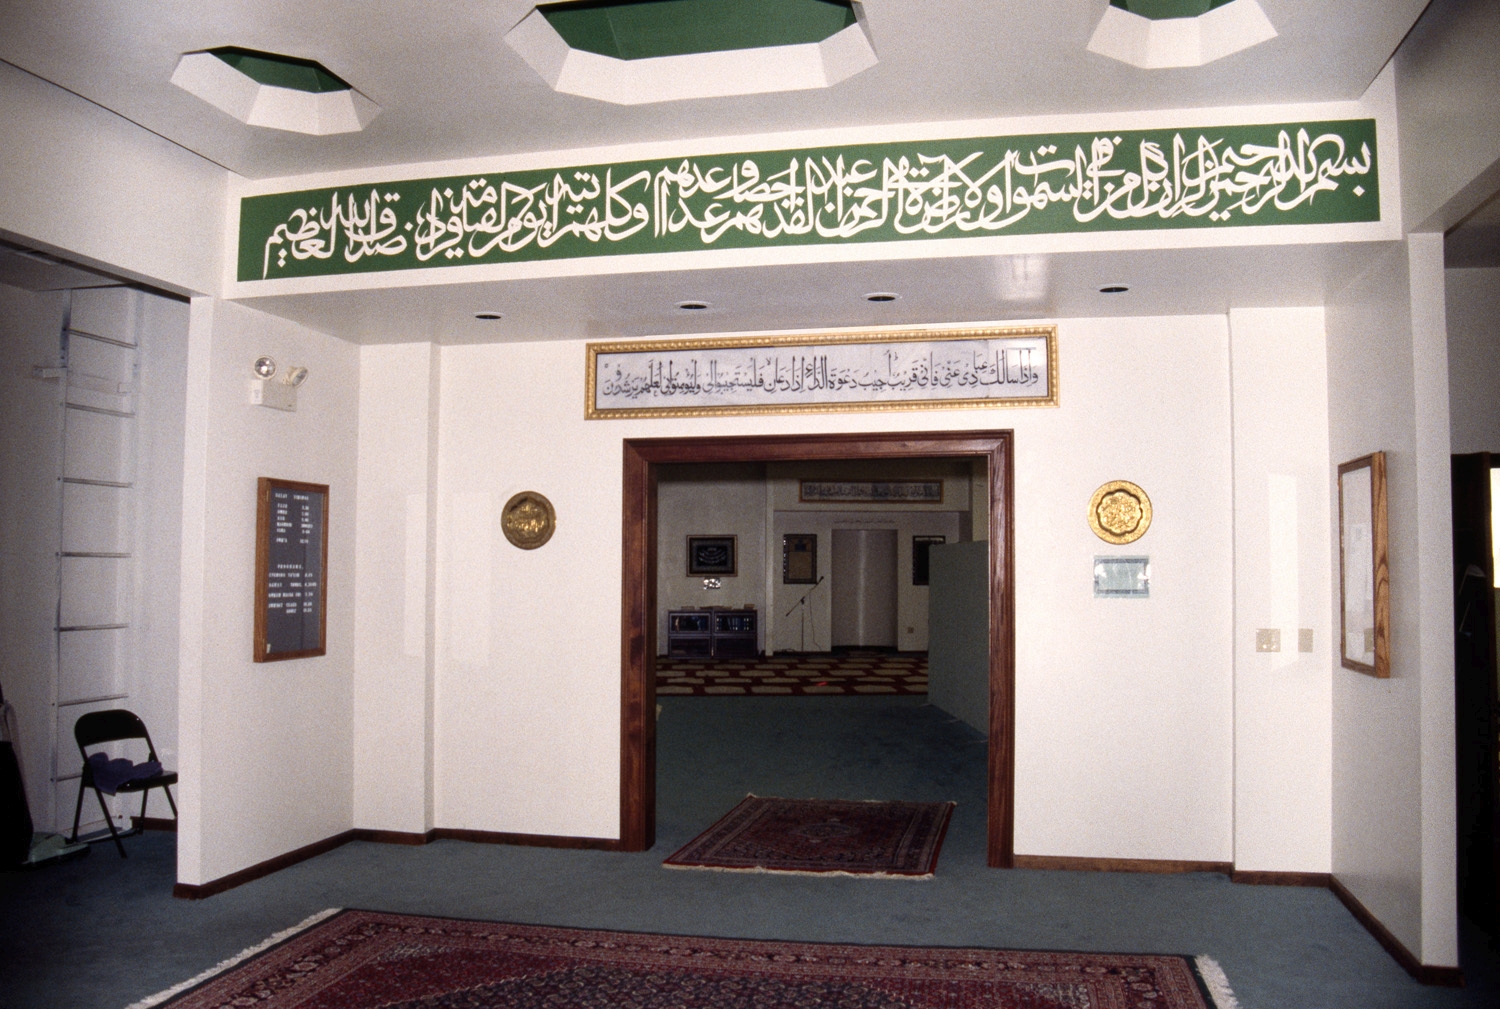 Islamic Society of Western Massachusetts - Main lobby, view with inscription